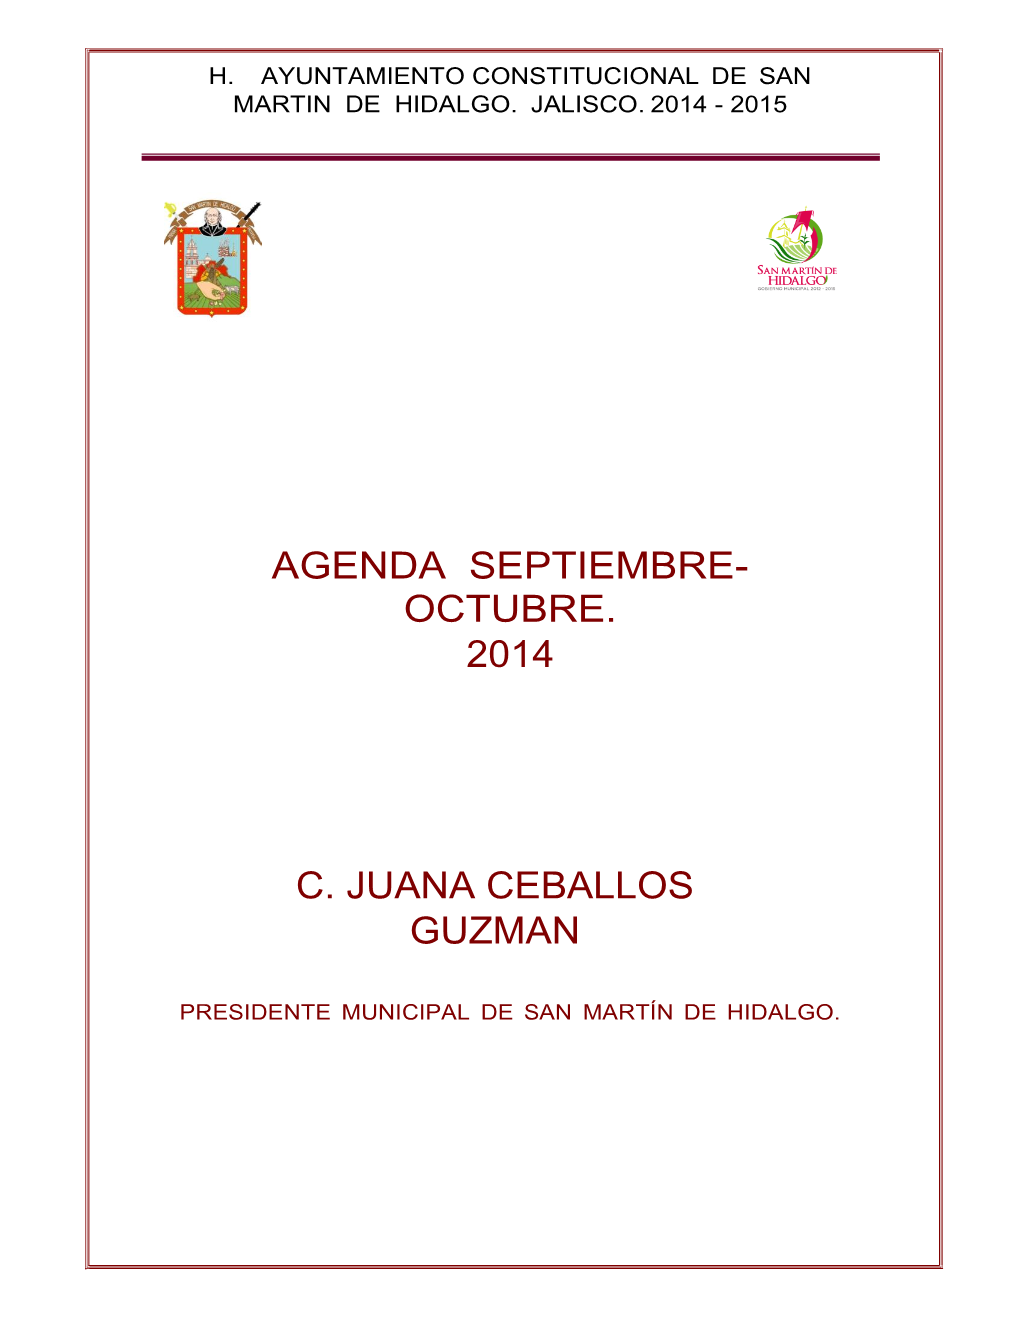 Agenda Septiembre- Octubre. 2014 C. Juana Ceballos Guzman